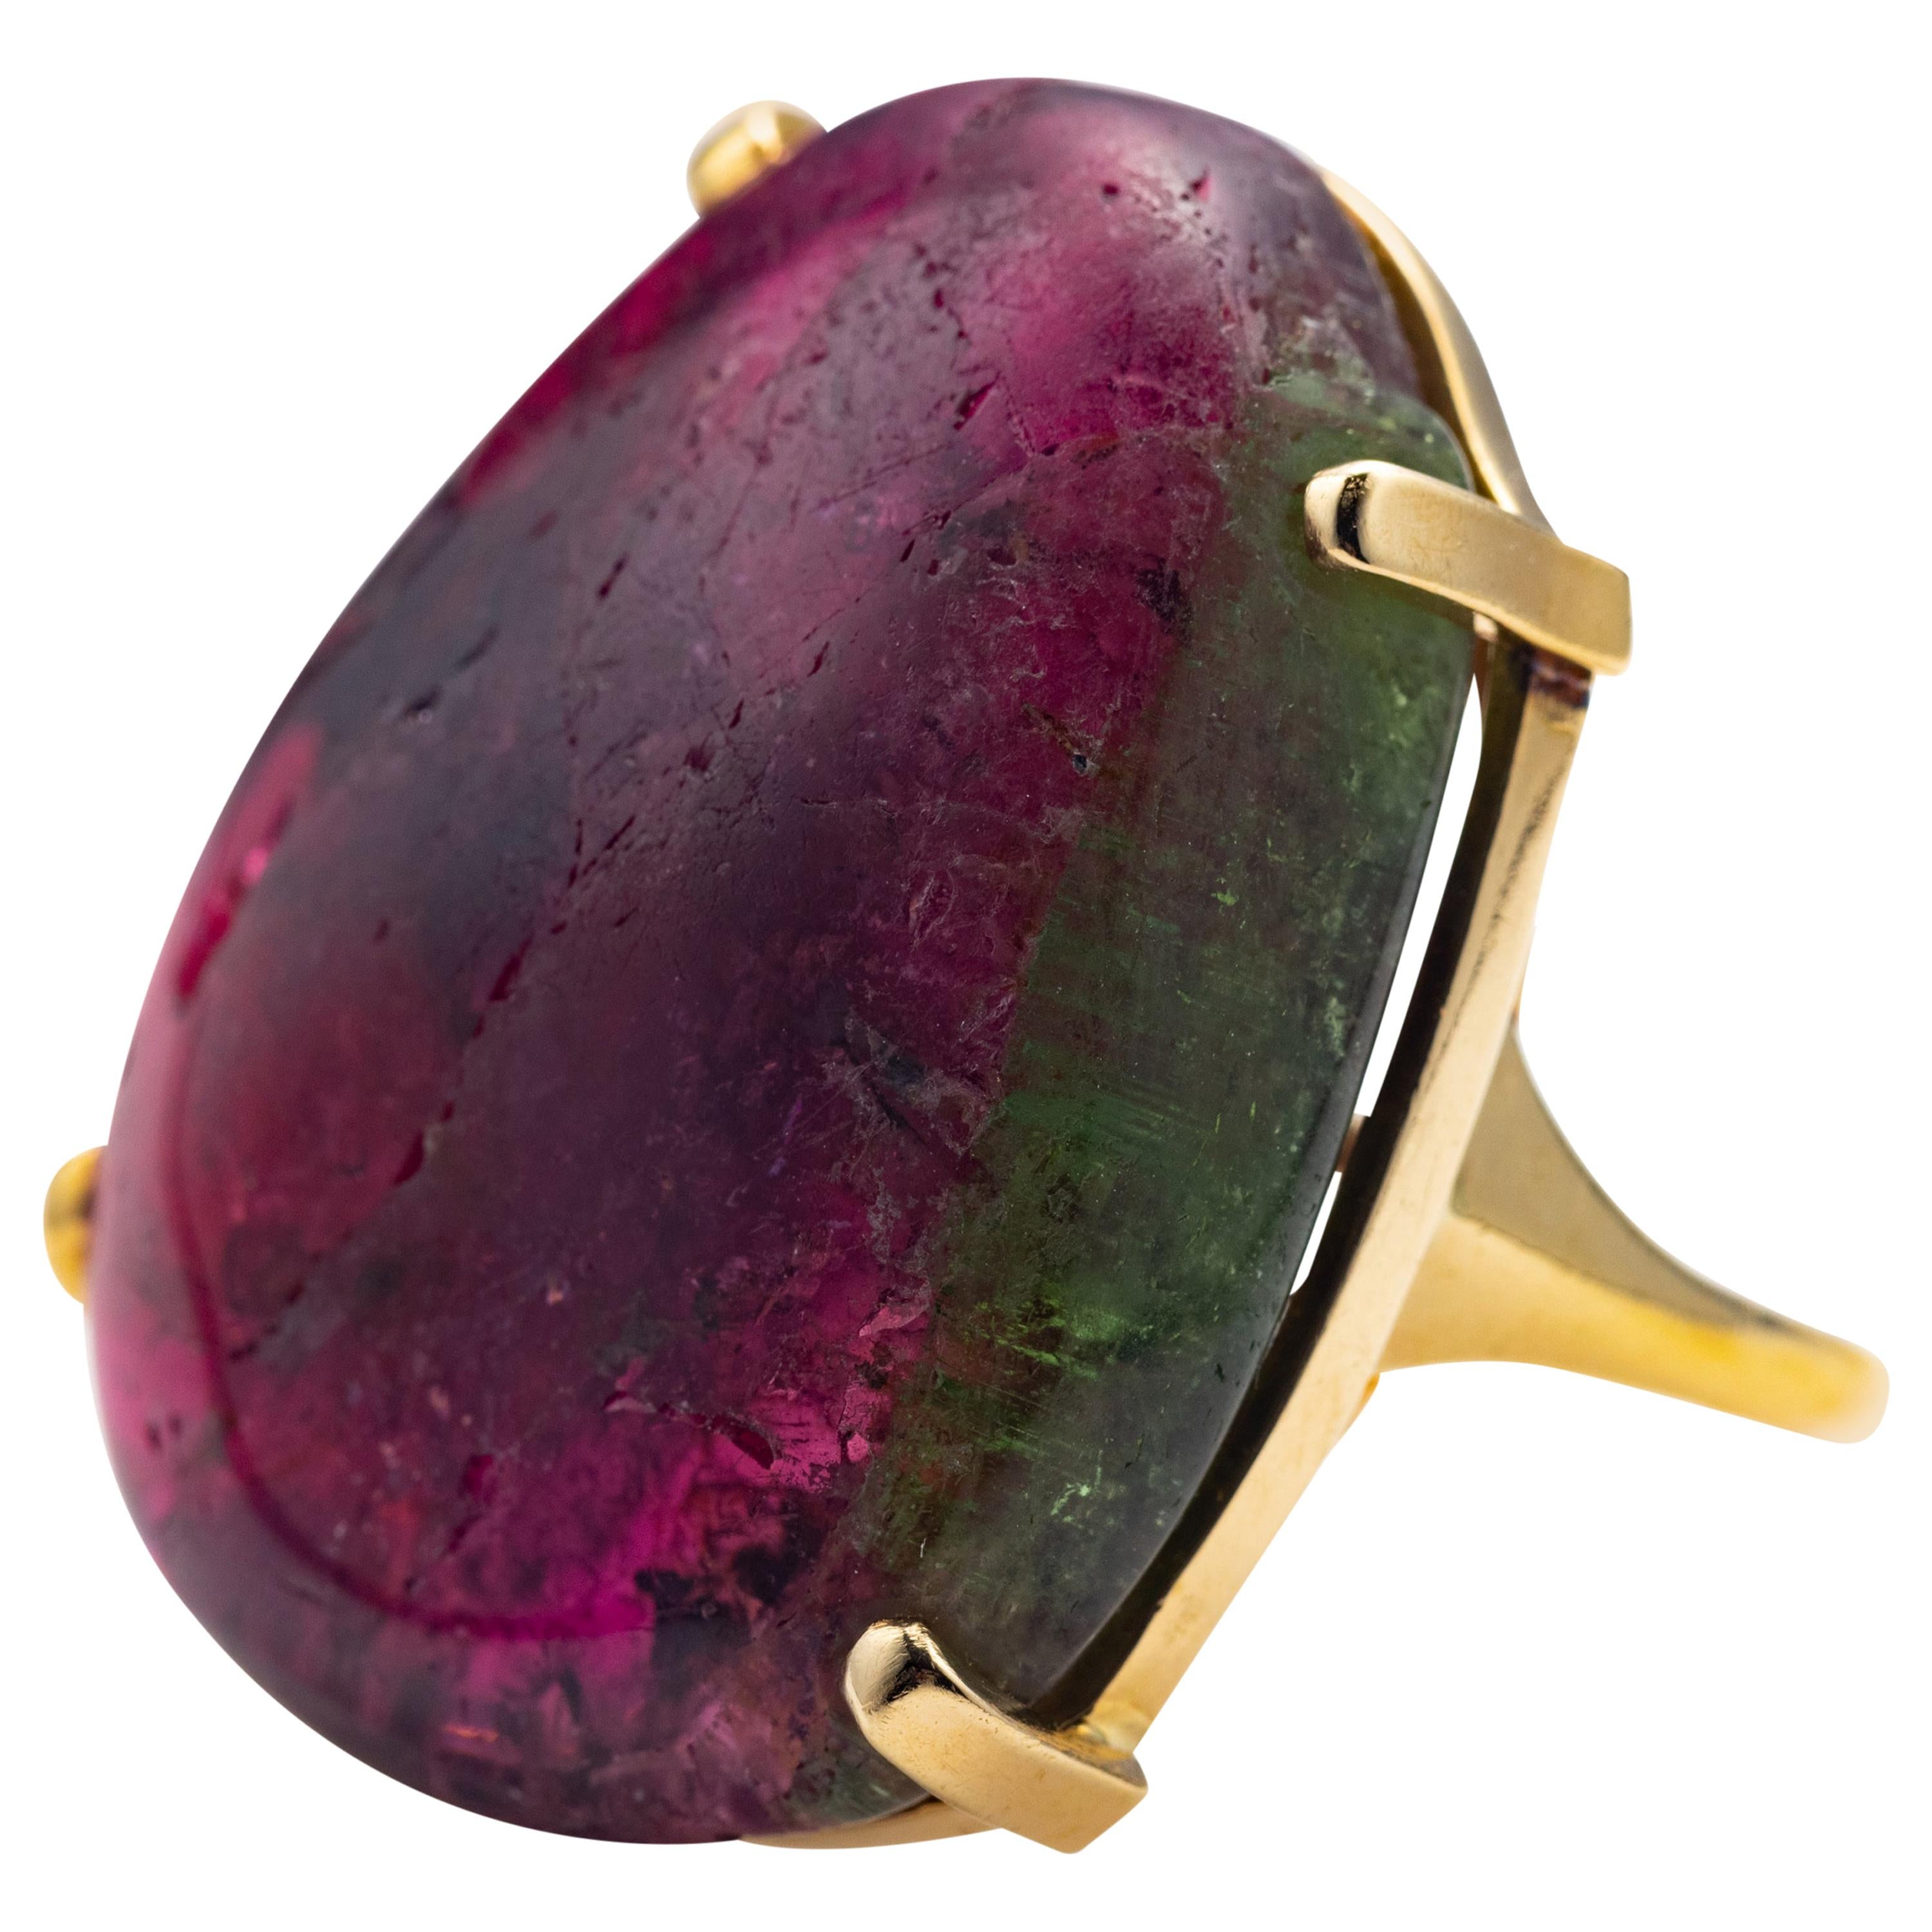 Tourmaline Ring Featuring Impressive Bicolor Cabochon